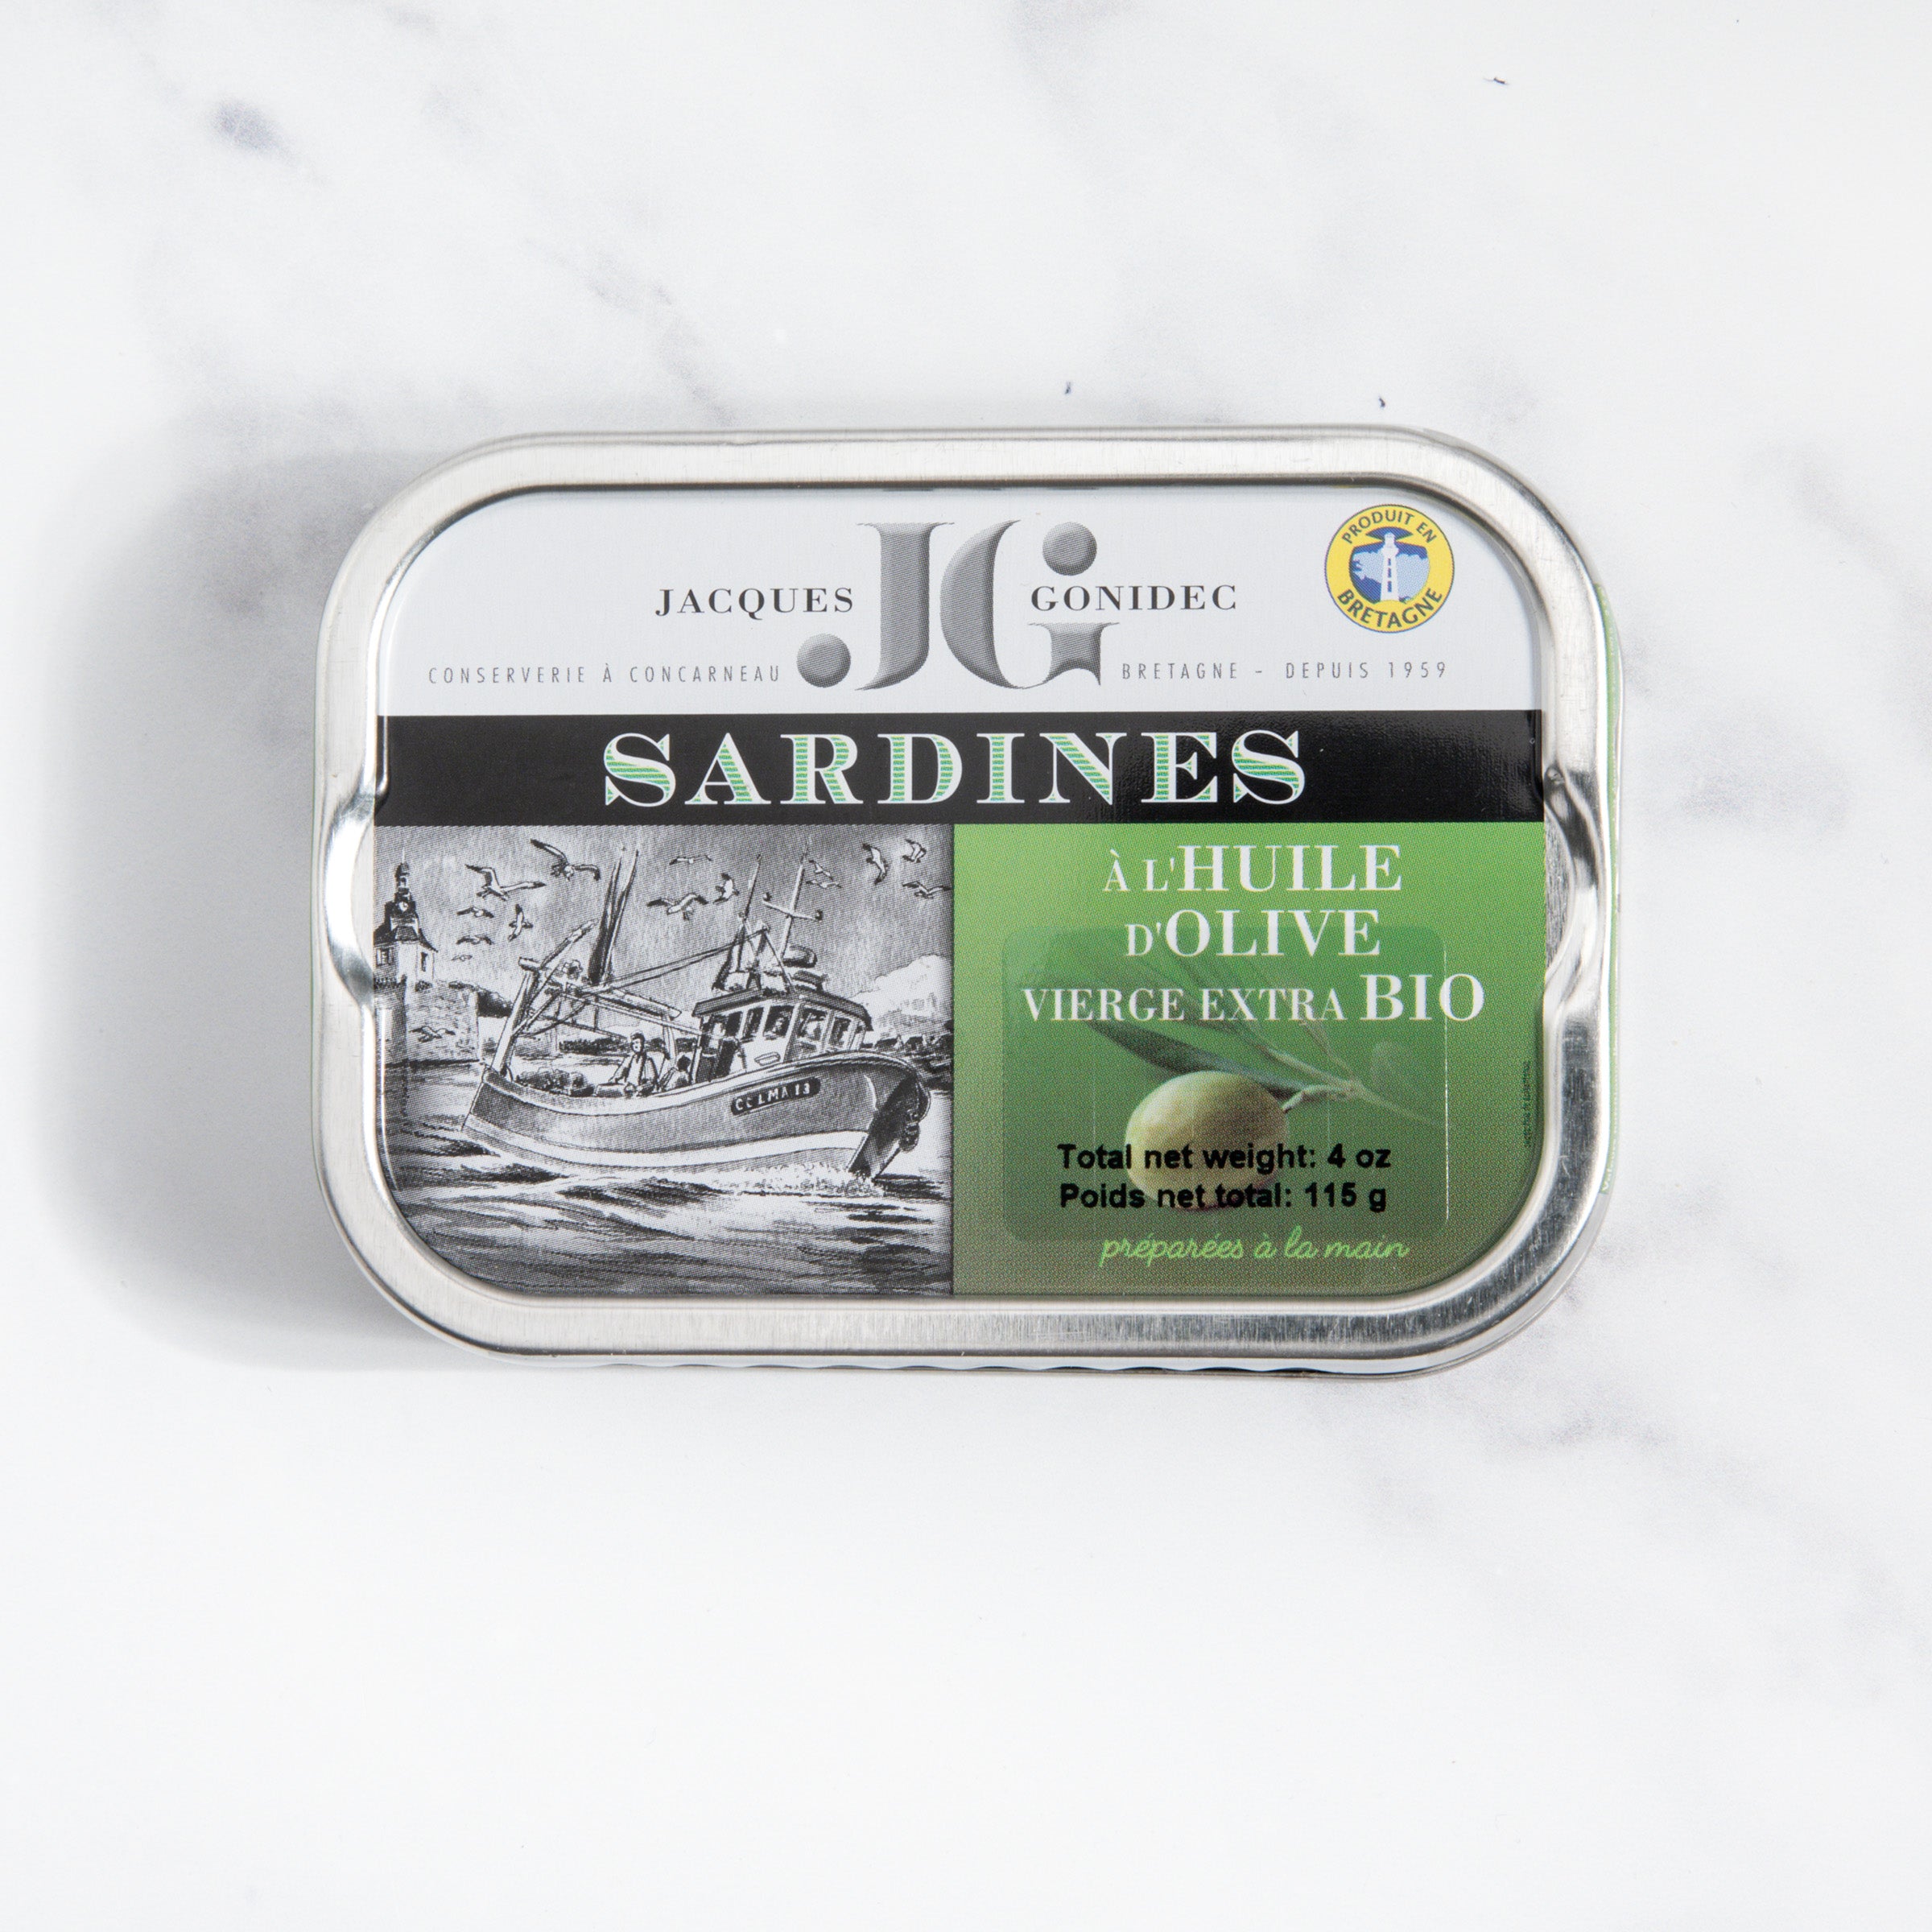 igourmet_7330_French Sardines_Gonidec_Anchovies & Sardines